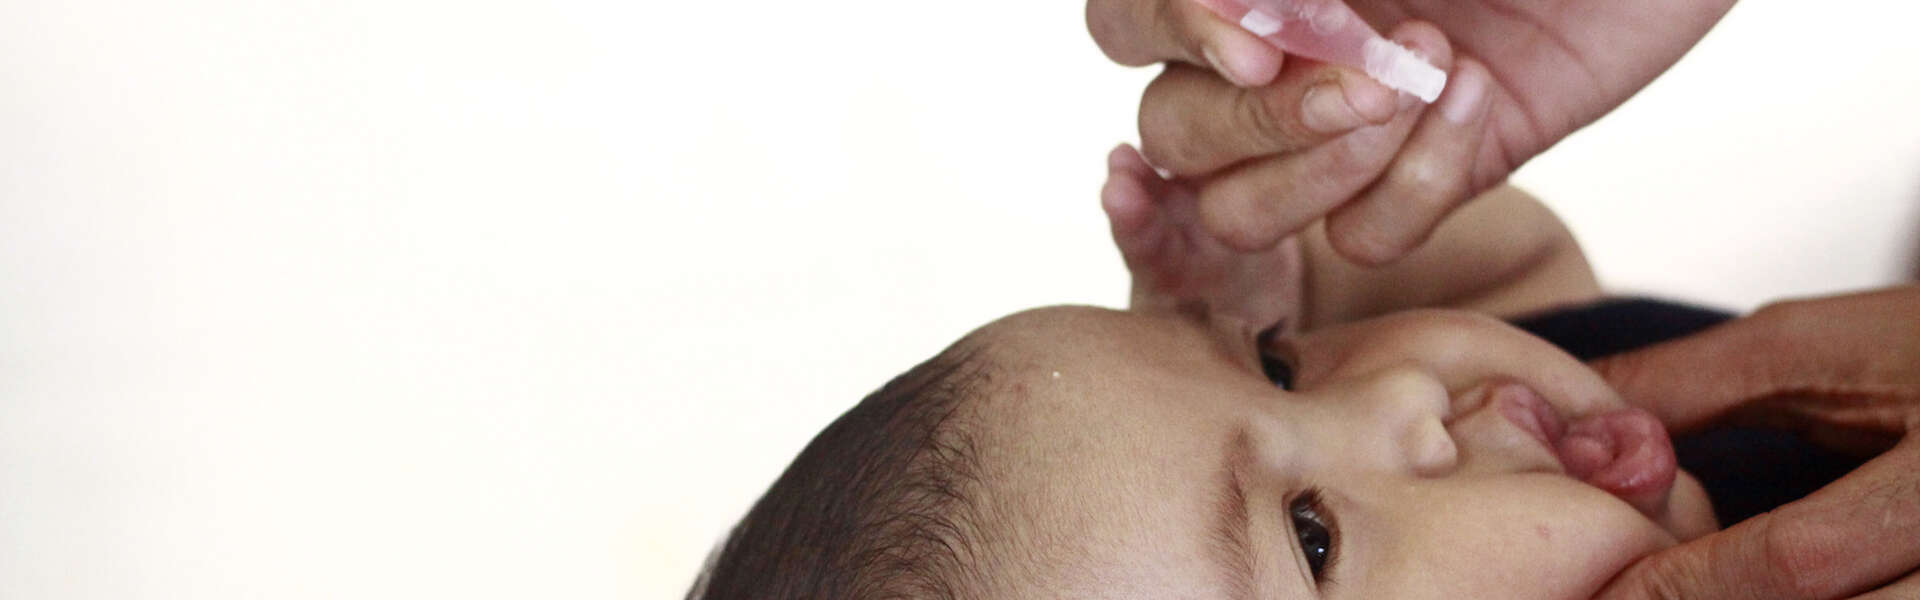 A baby gets a vaccine, NextBillion.net